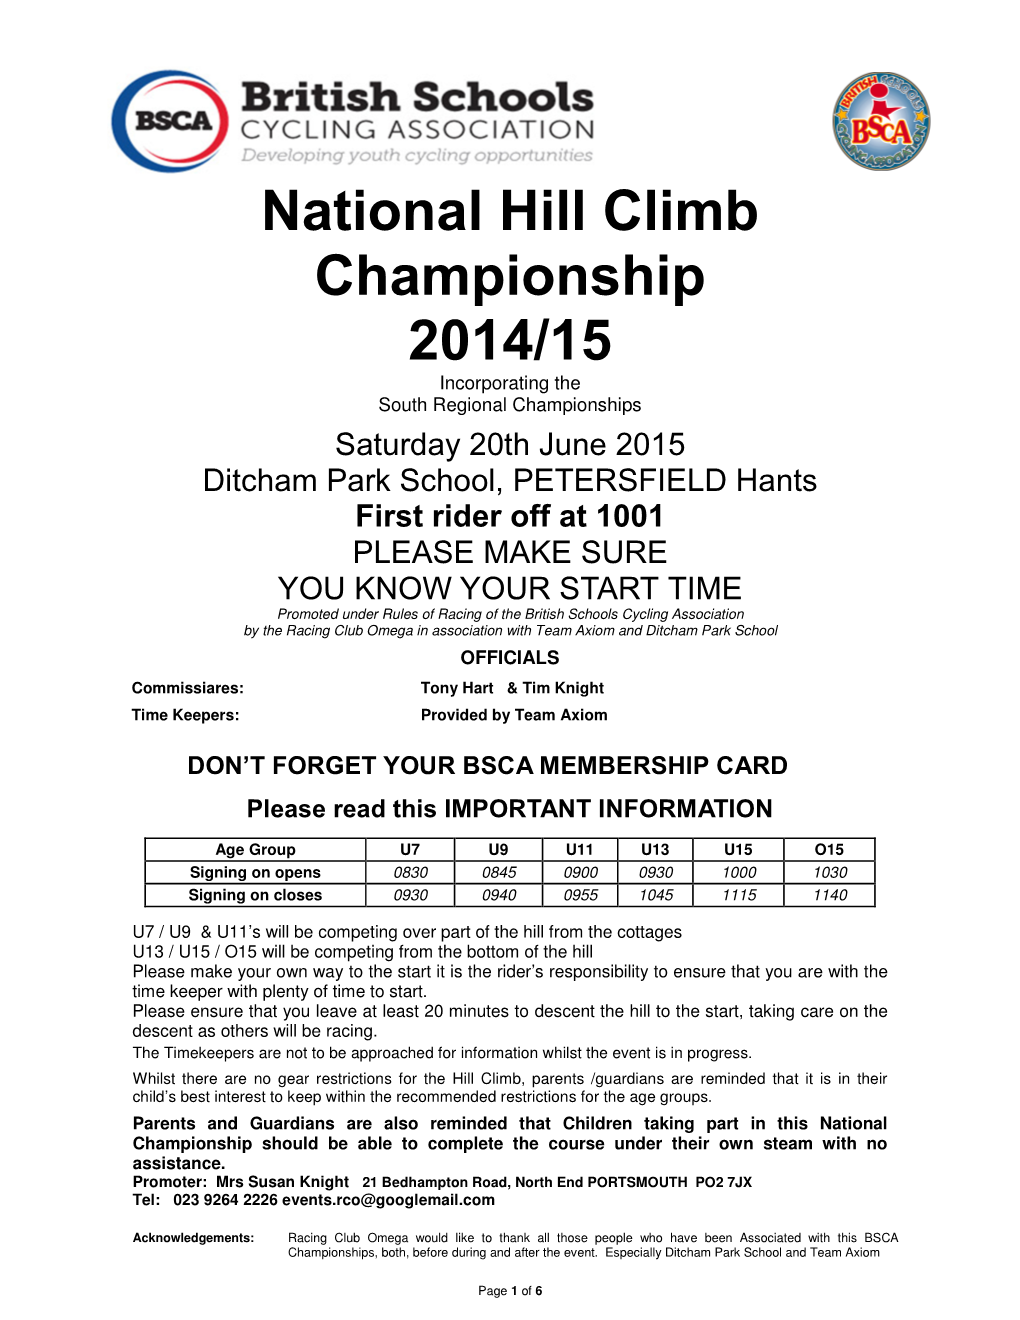 National Hill Climb Championship 2014/15